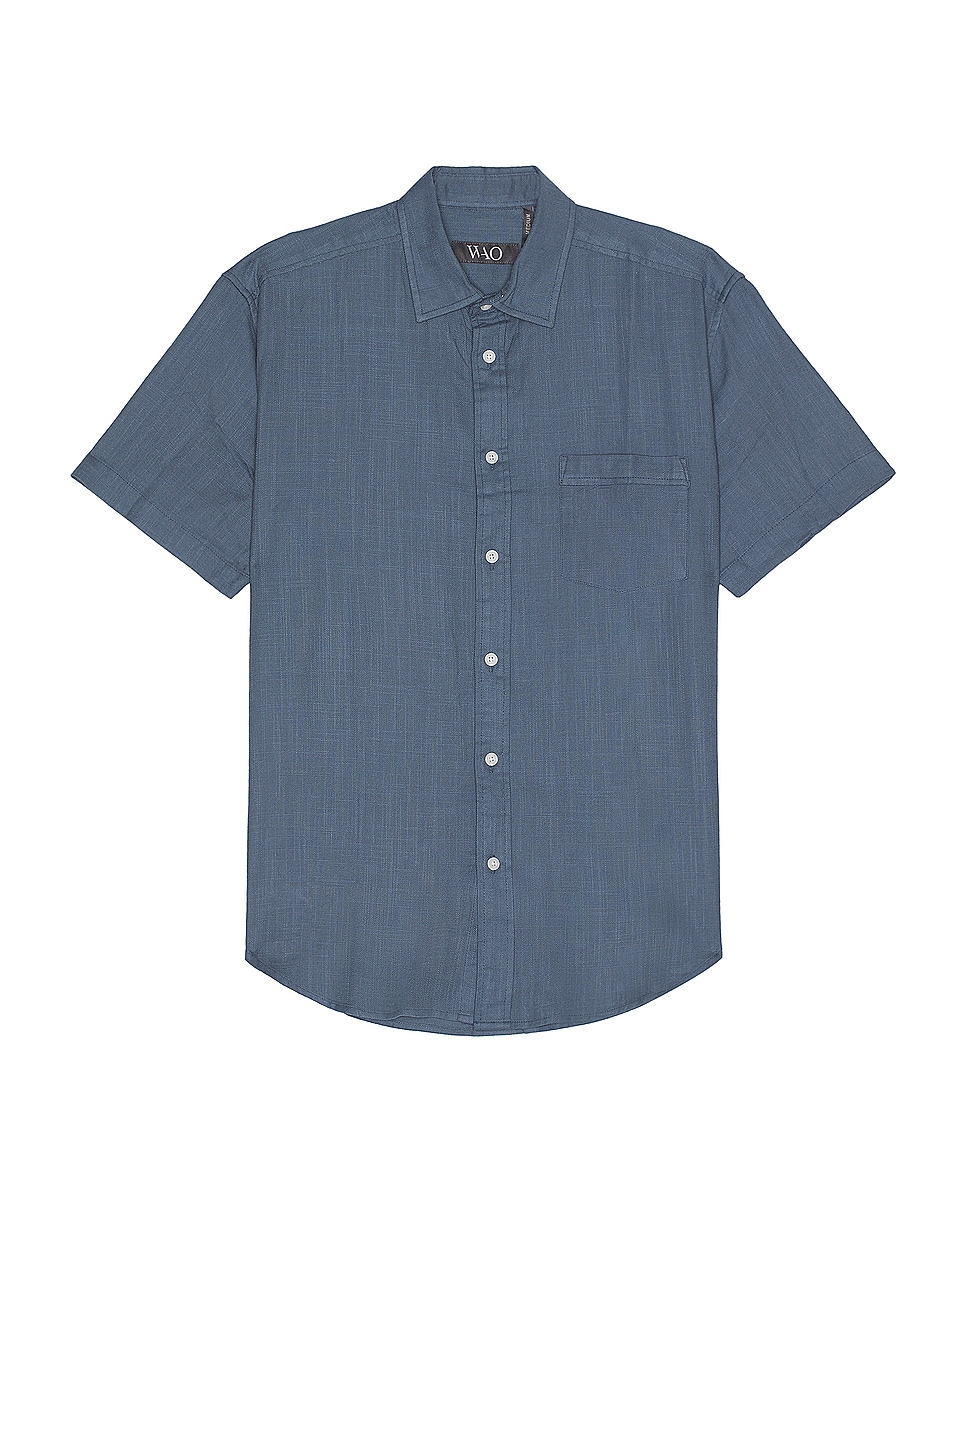 Image 1 of WAO Short Sleeve Slub Shirt in Indigo